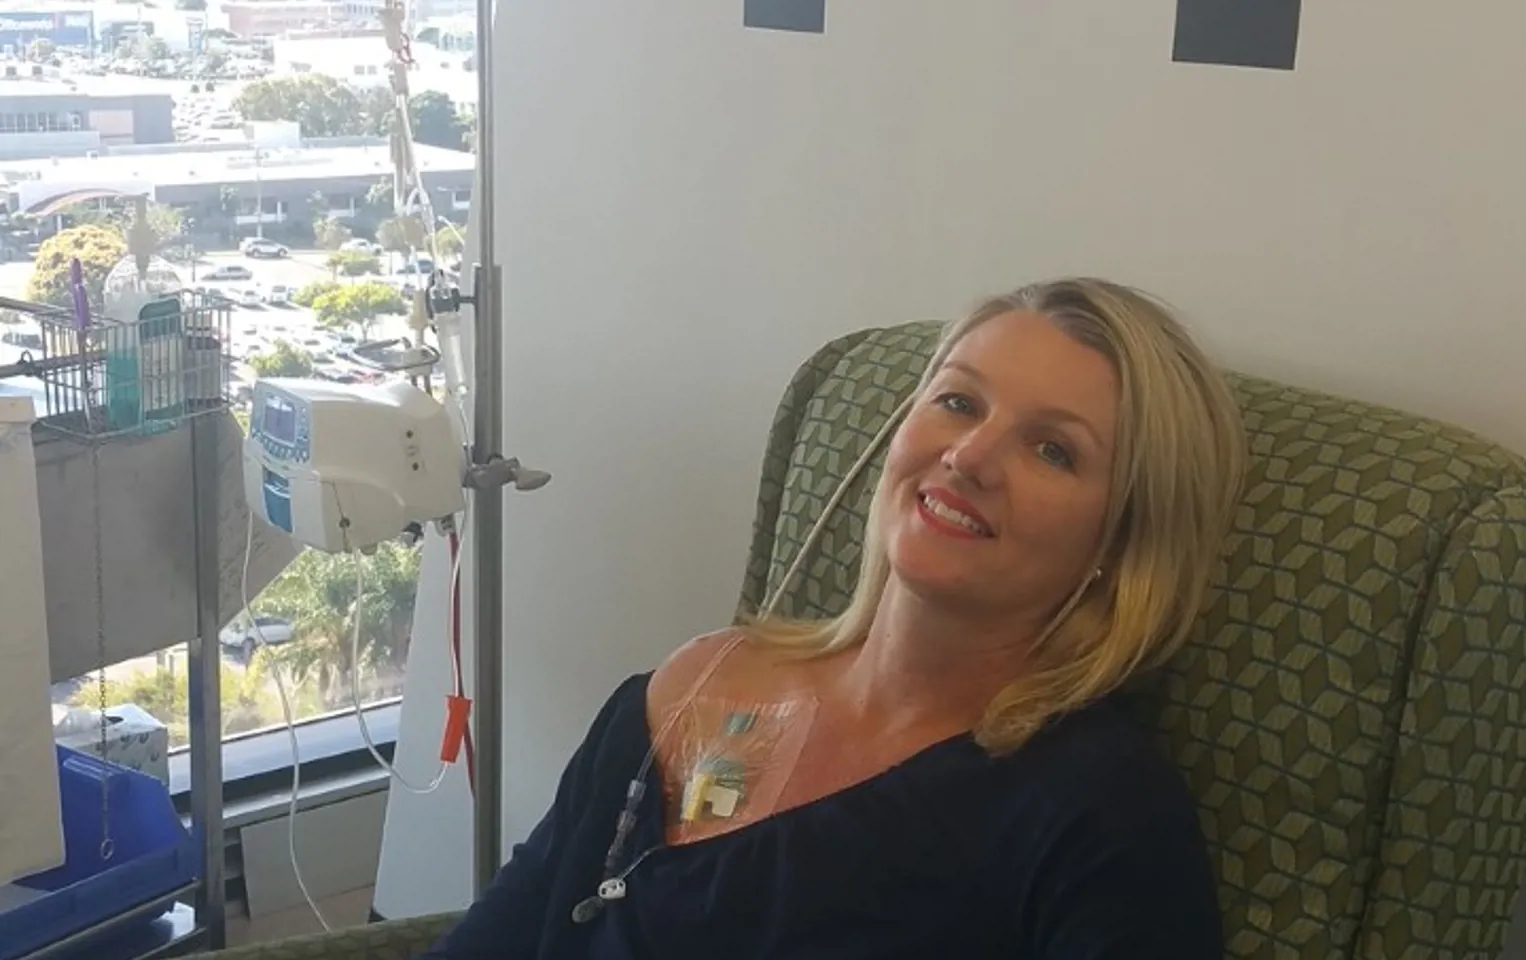 Paula sitting in hospital chair having chemo